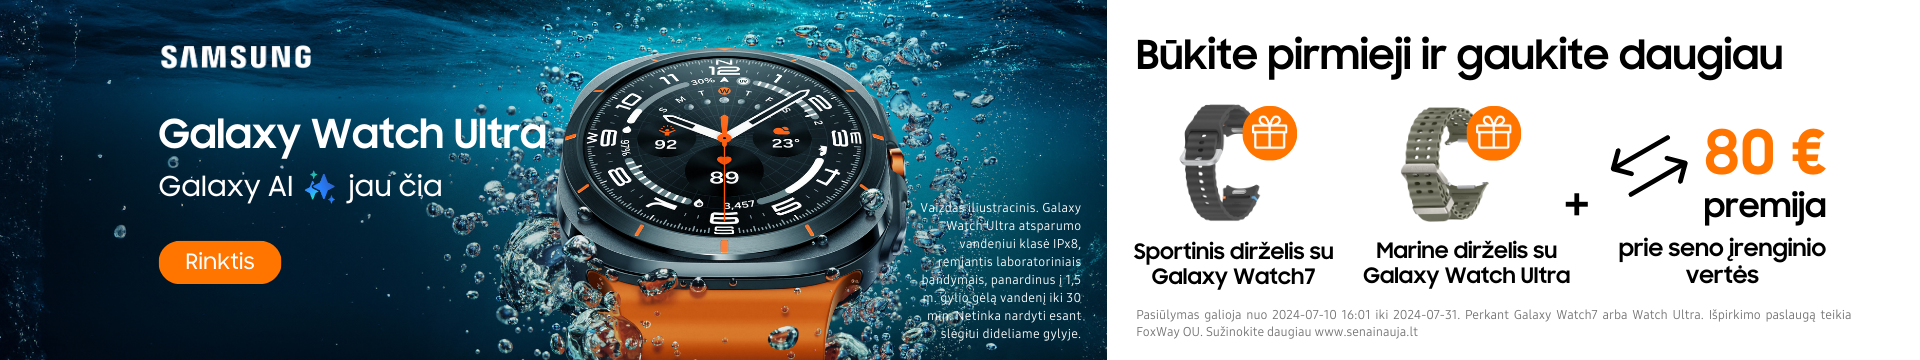 Samsung Galaxy Watch Ultra jau prekyboje su dovana, Mobili prekyba